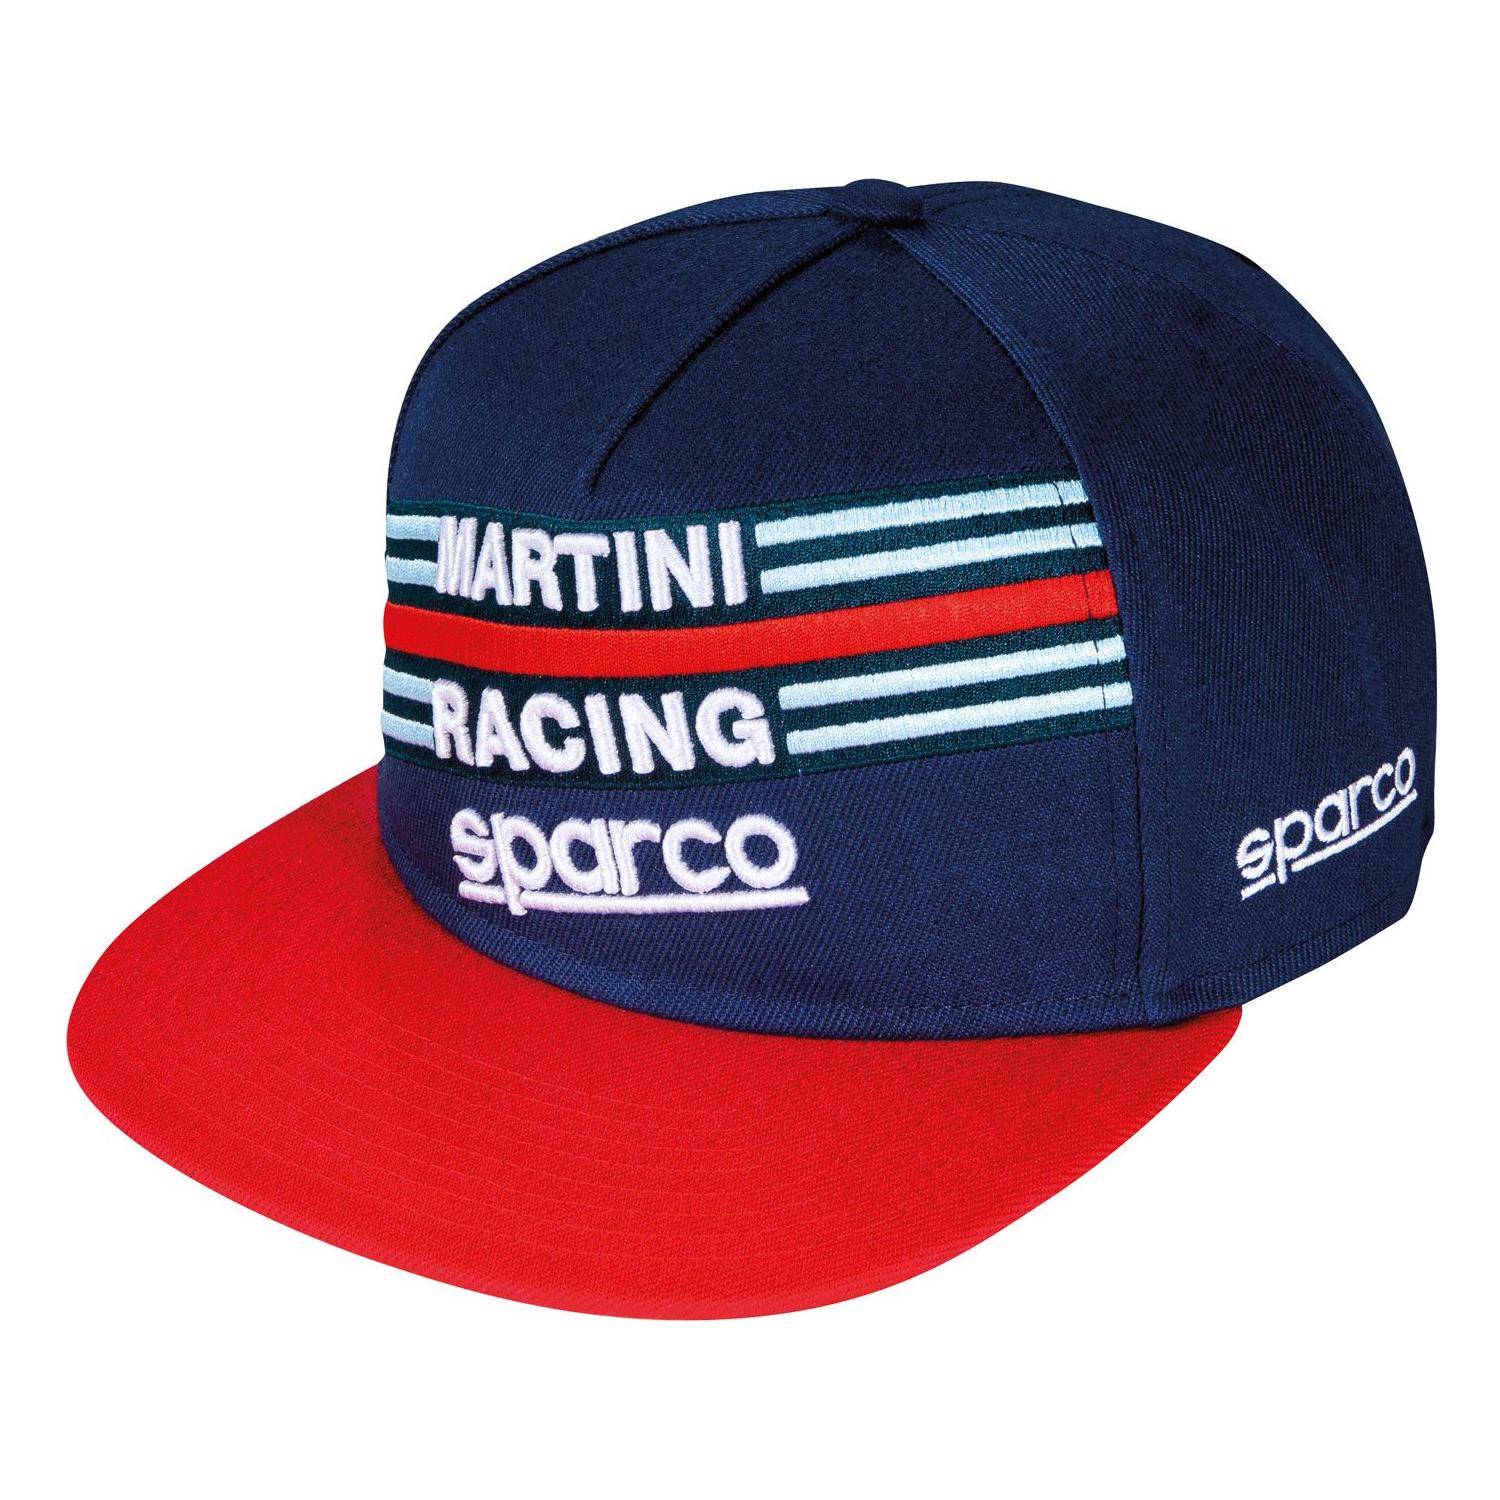 Sparco keps Martini Racing